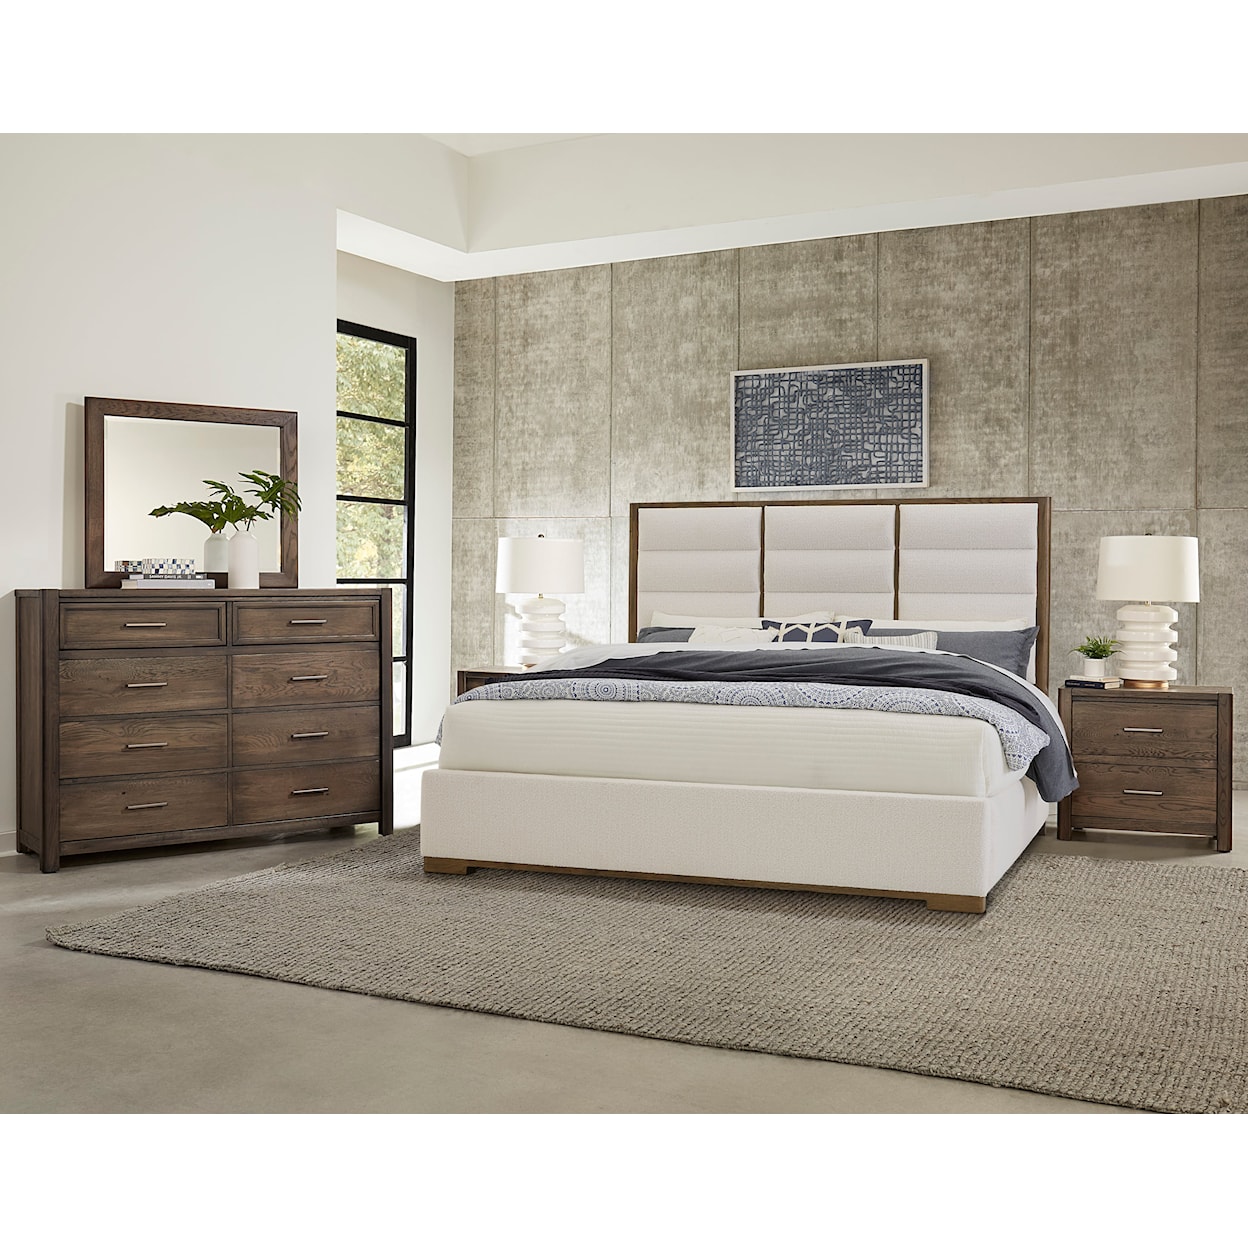 Laurel Mercantile Co. Crafted Oak Upholstered Queen Bedroom Set